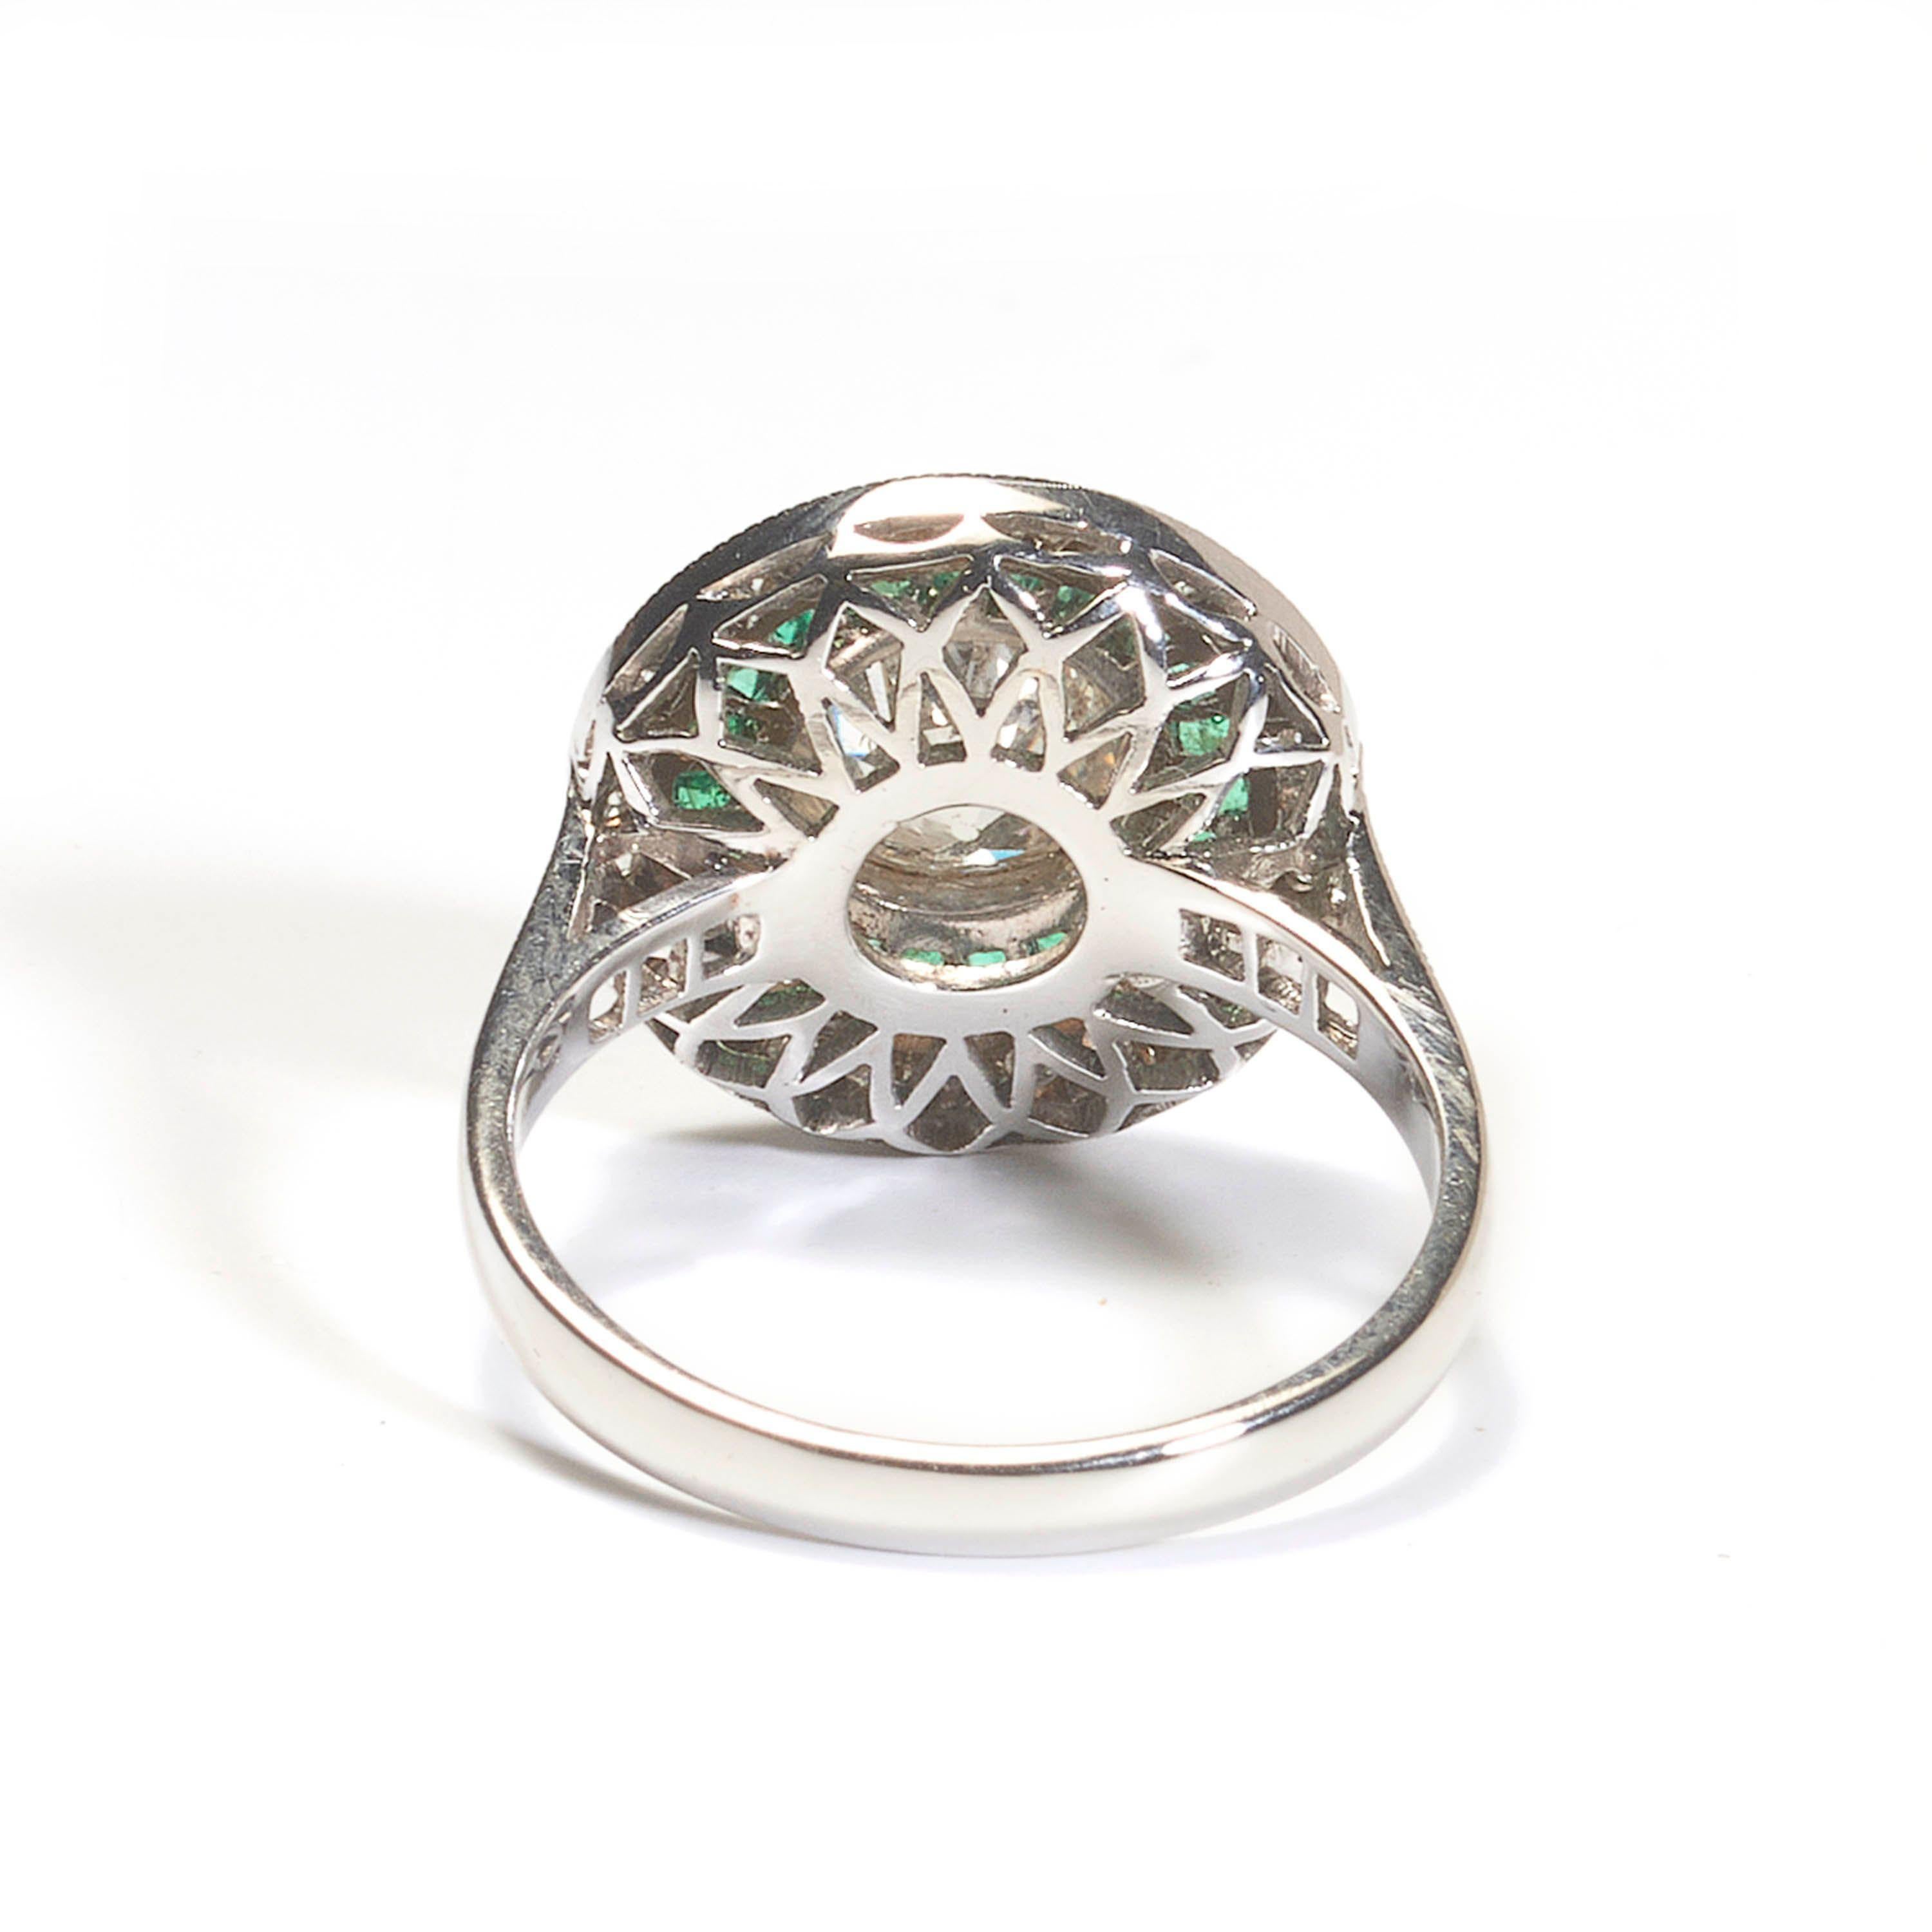 Old European Cut Diamond, Emerald and Platinum Target Ring, 1.29 Carats